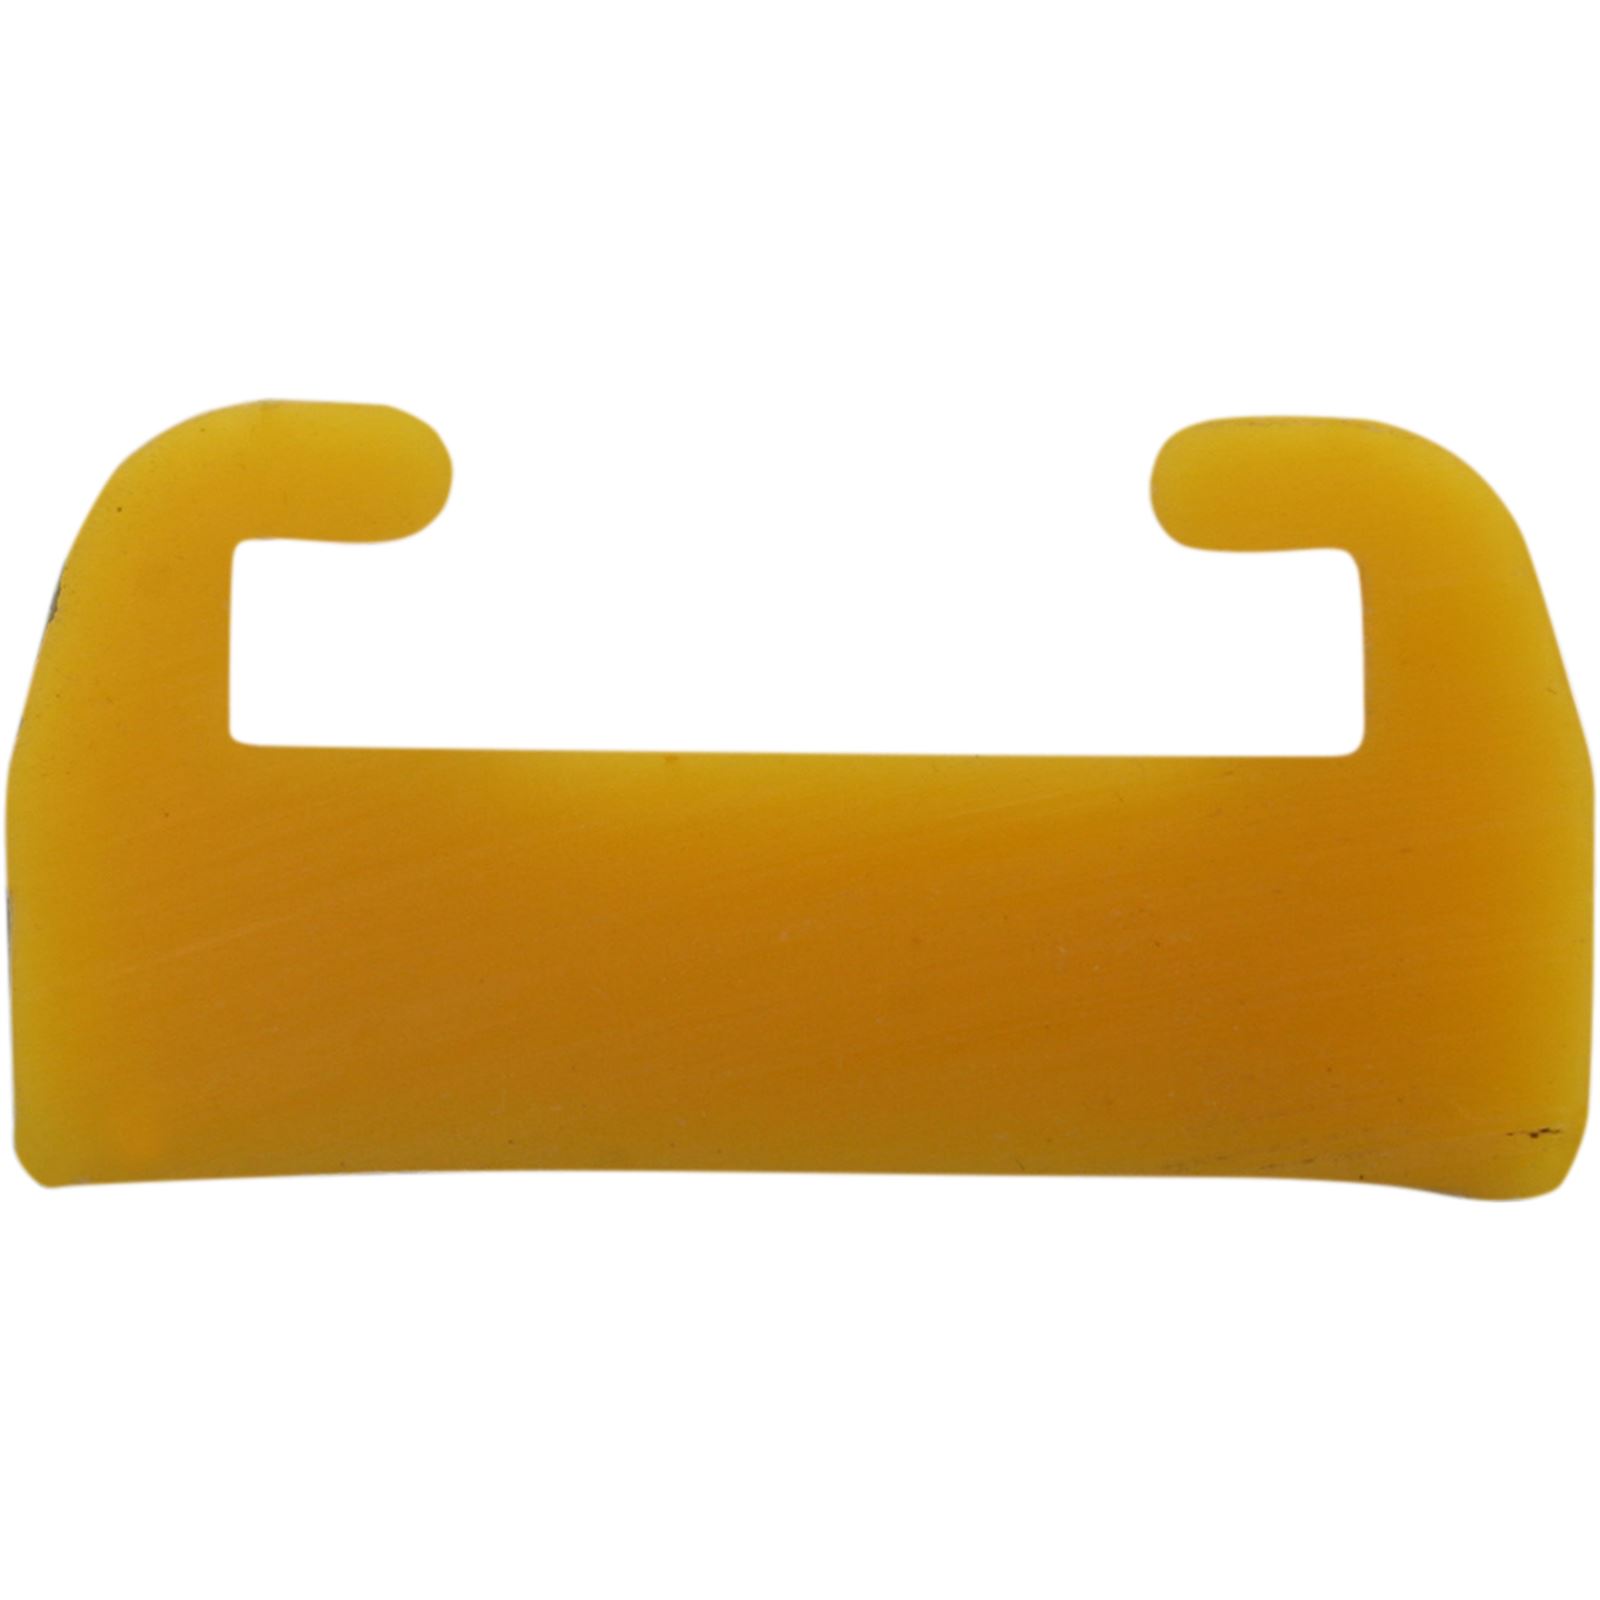 Garland Yellow Replacement Slide - UHMW - Profile 26 - Length 41.63" - Ski-Doo